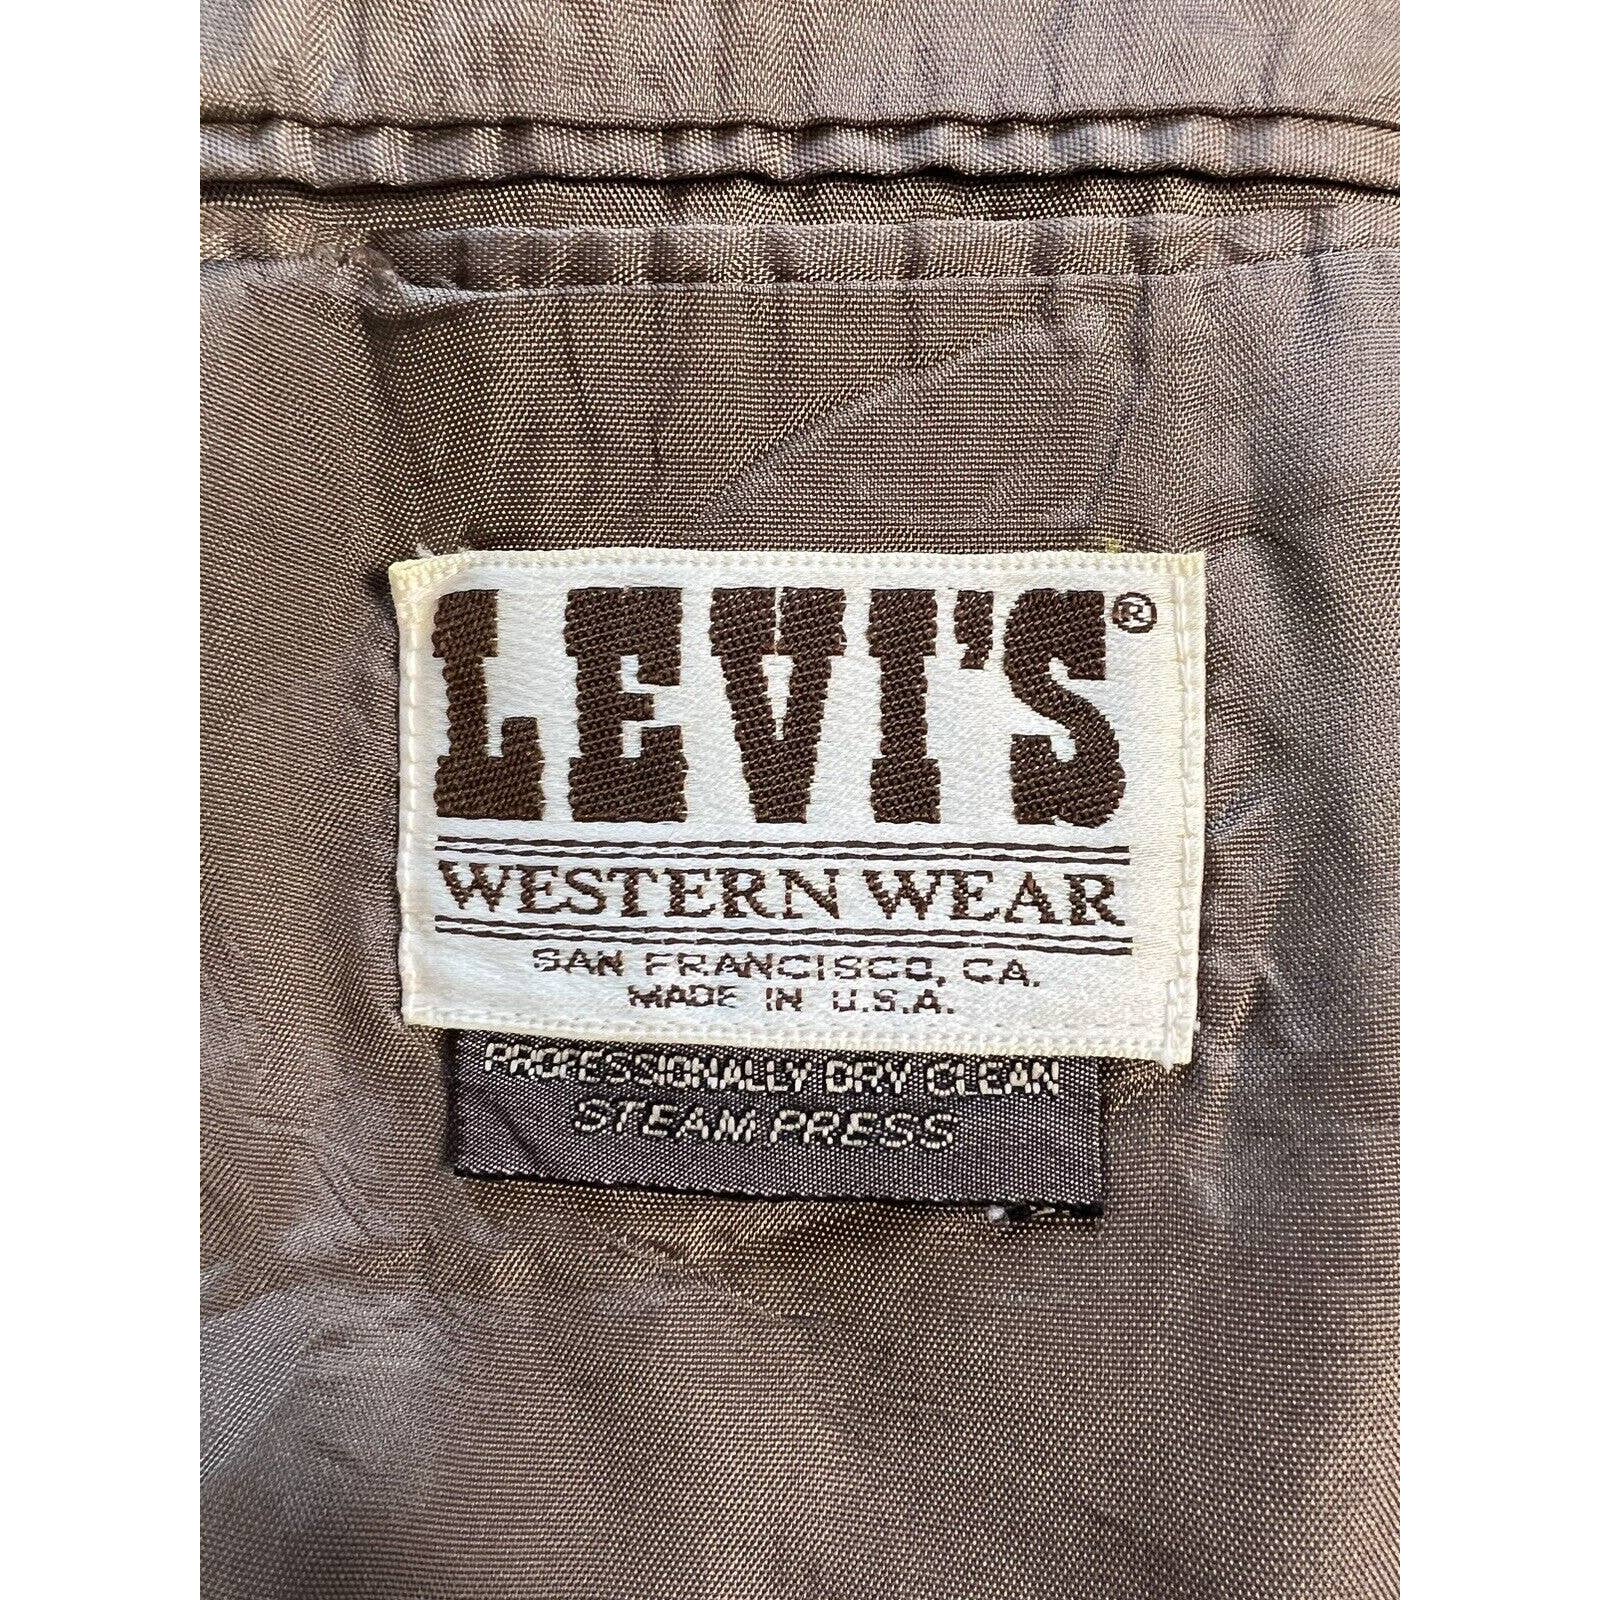 Levis Western Wear 2 Button Blazer Men’s 44R Tan Vintage 70’s Polyester